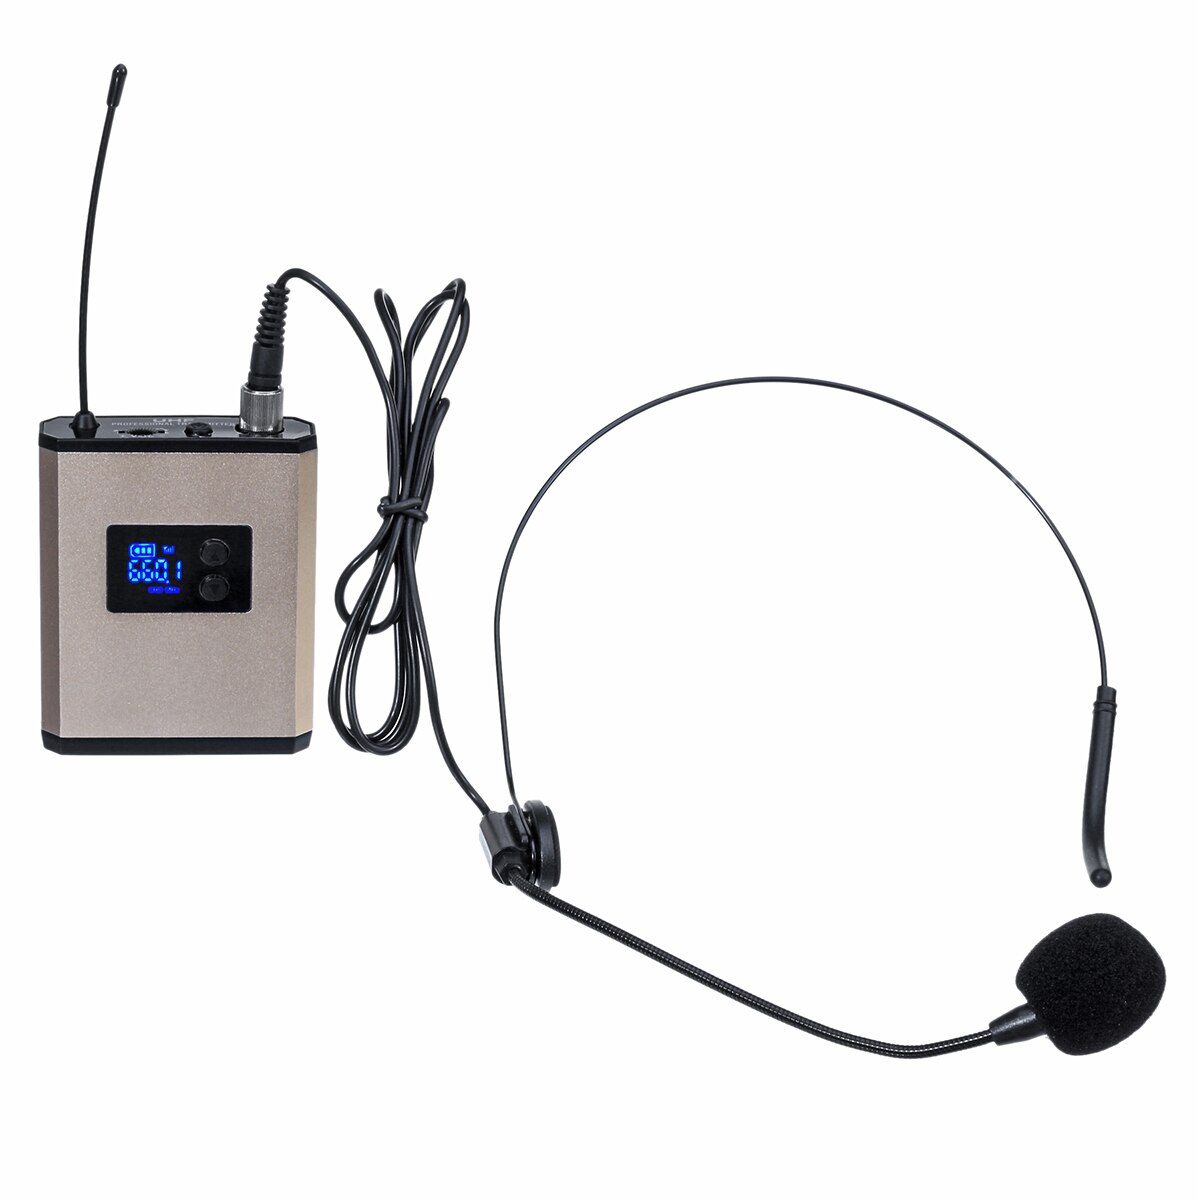 Tzt uhf trådløst mikrofonsystem headset / lapel mini mikrofon med modtager bodypack sender: Headset type - guld